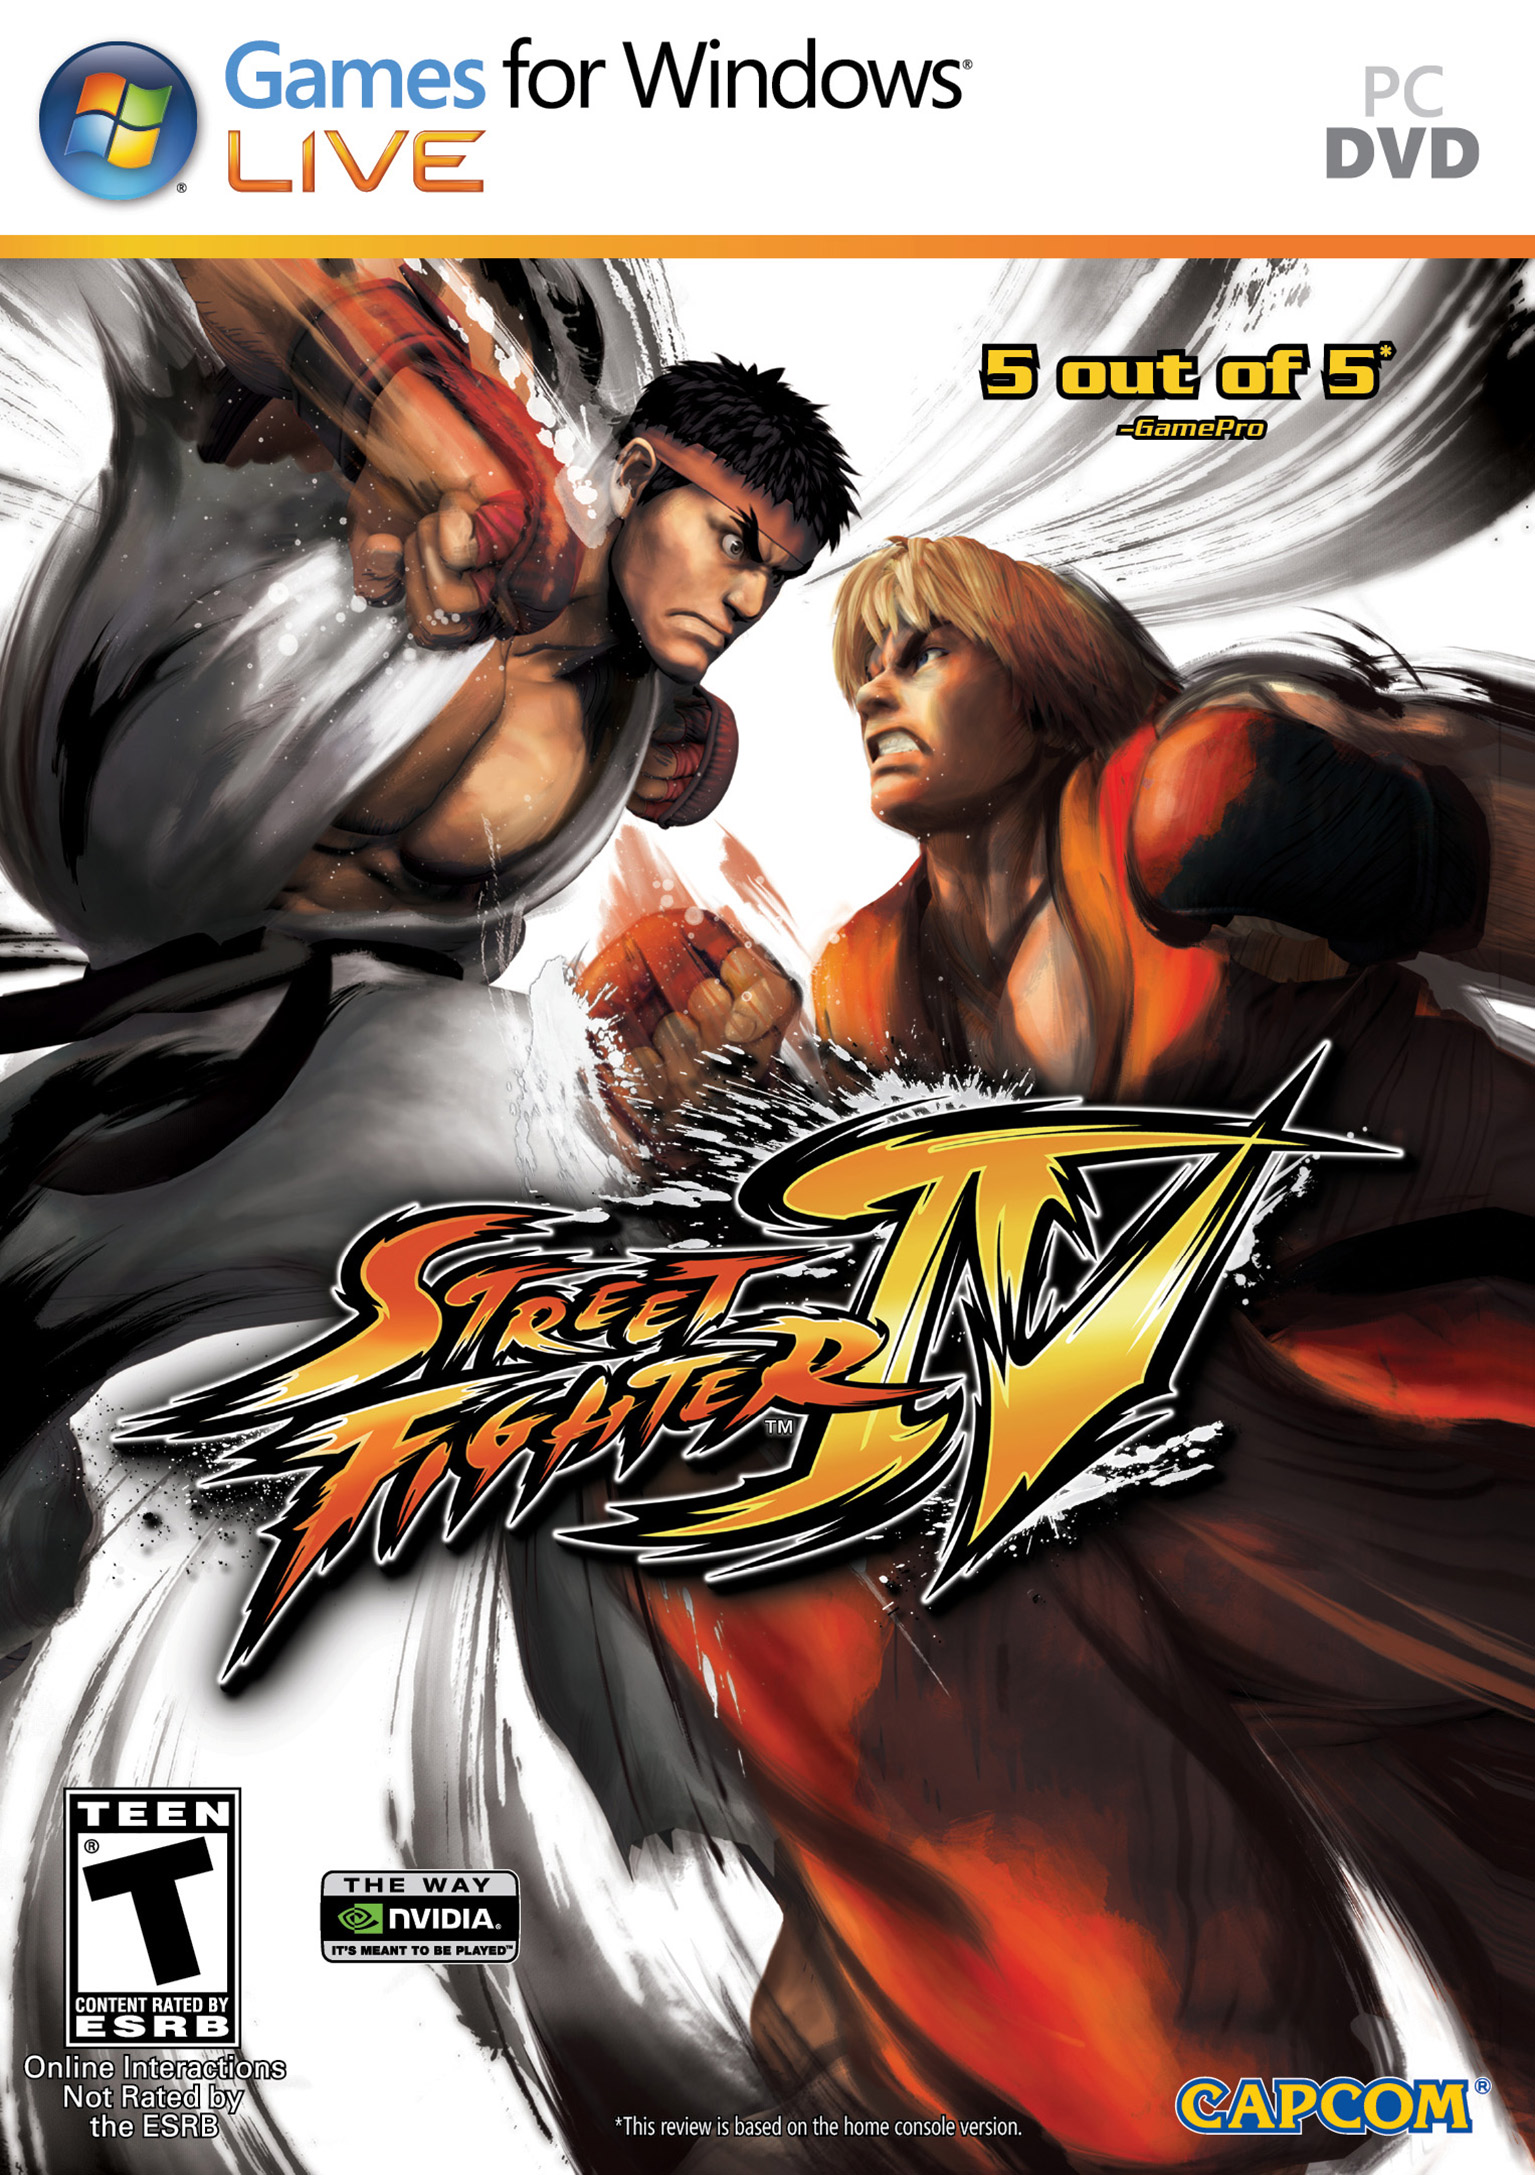 Street Fighter IV - pedn DVD obal